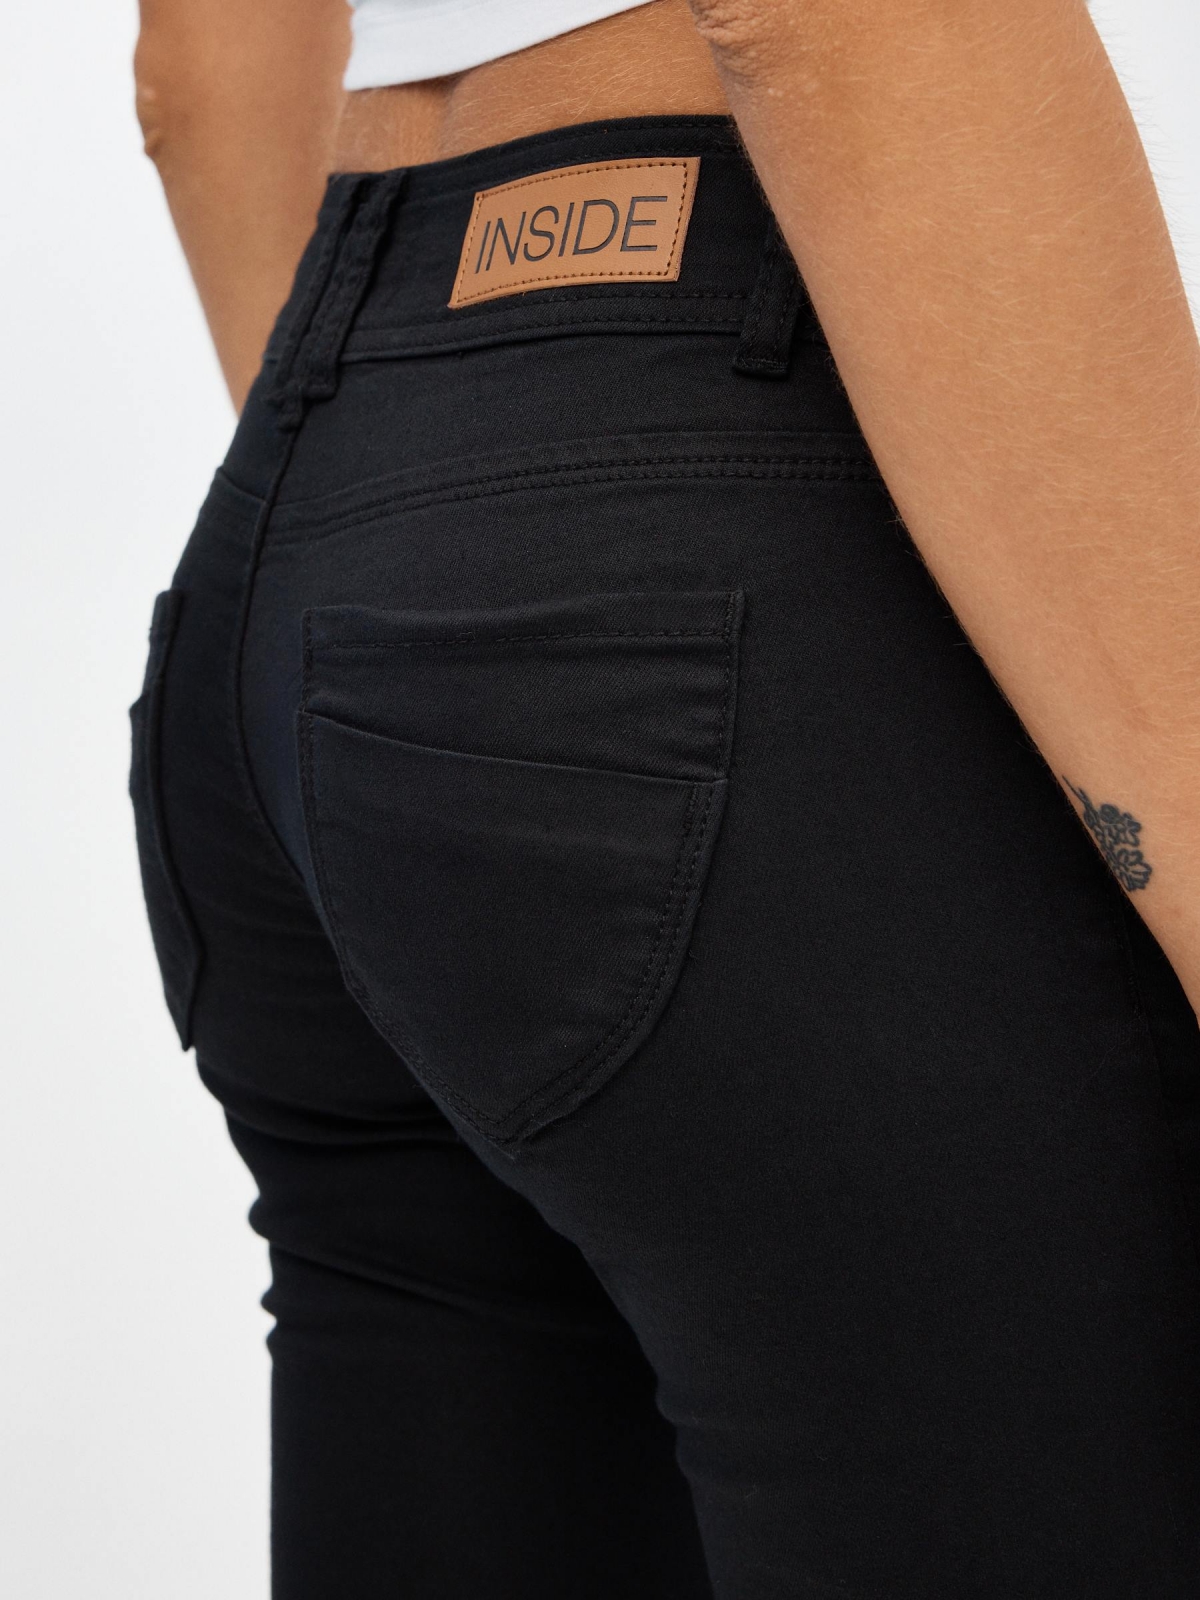 Low rise skinny jeans black detail view